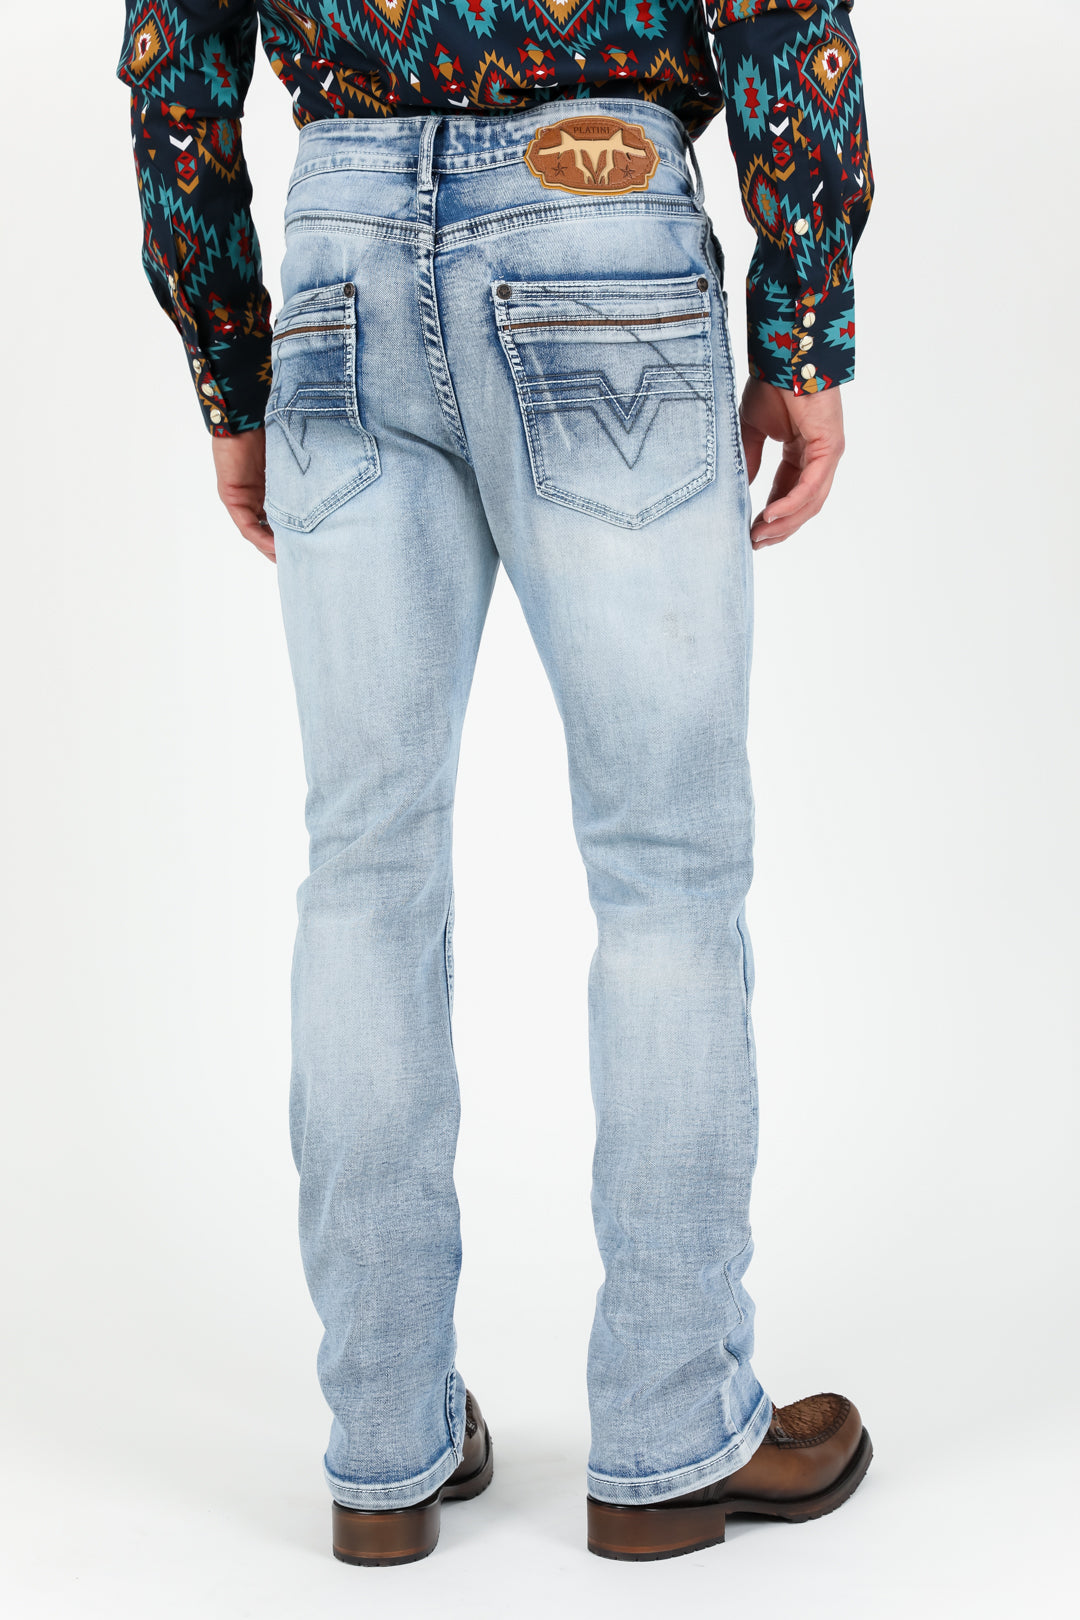 Holt Men's Light Blue Boot Cut Jeans